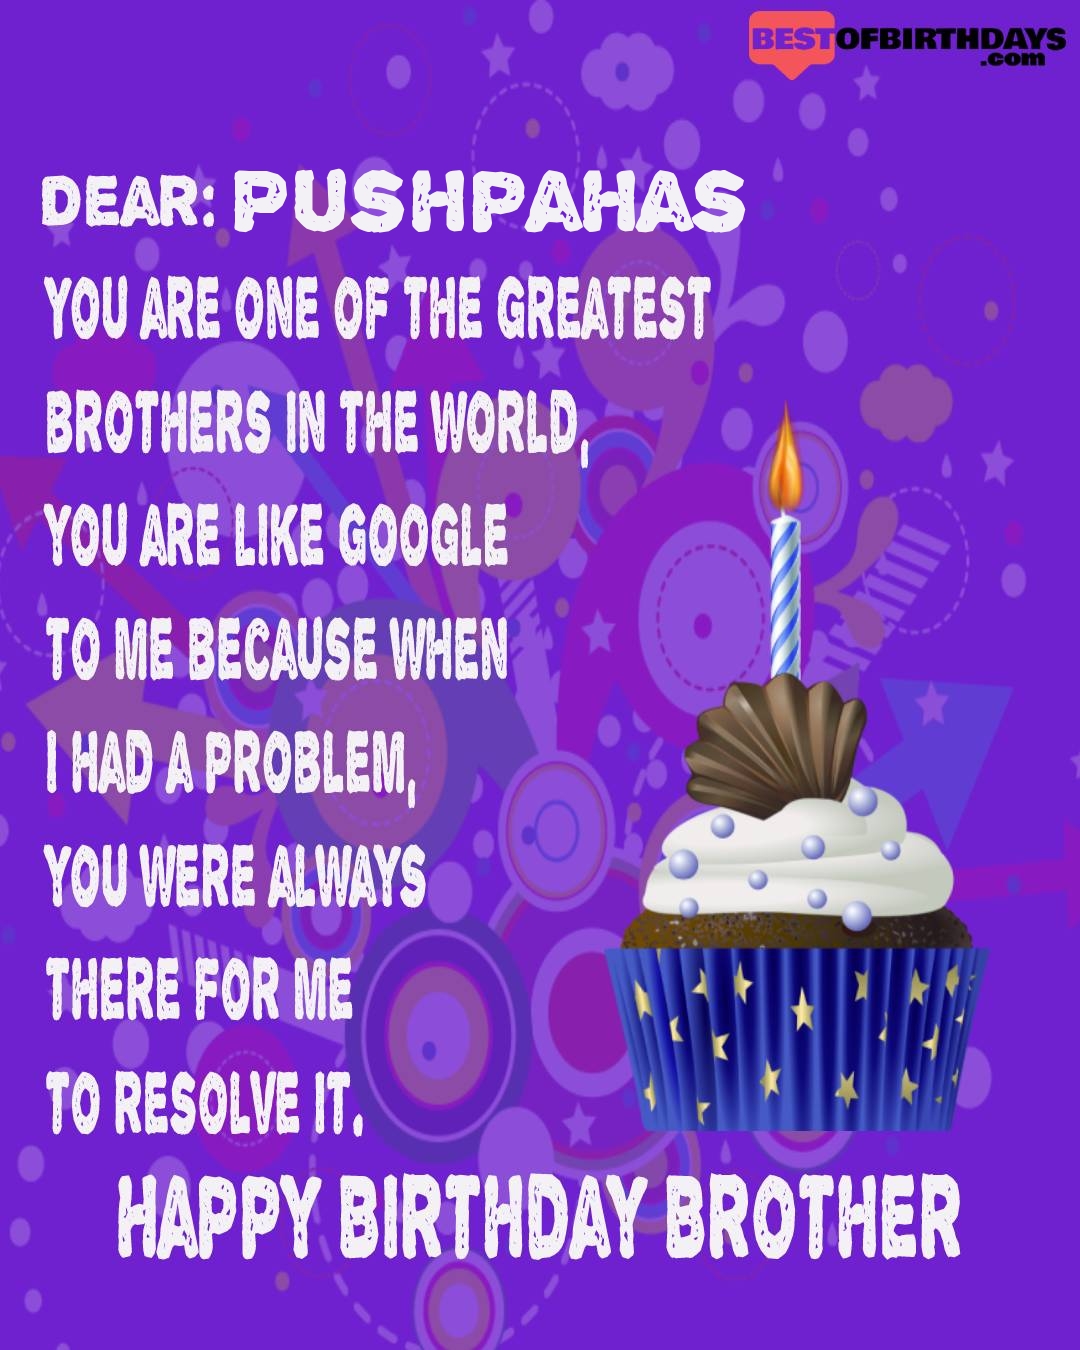 Happy birthday pushpahas bhai brother bro